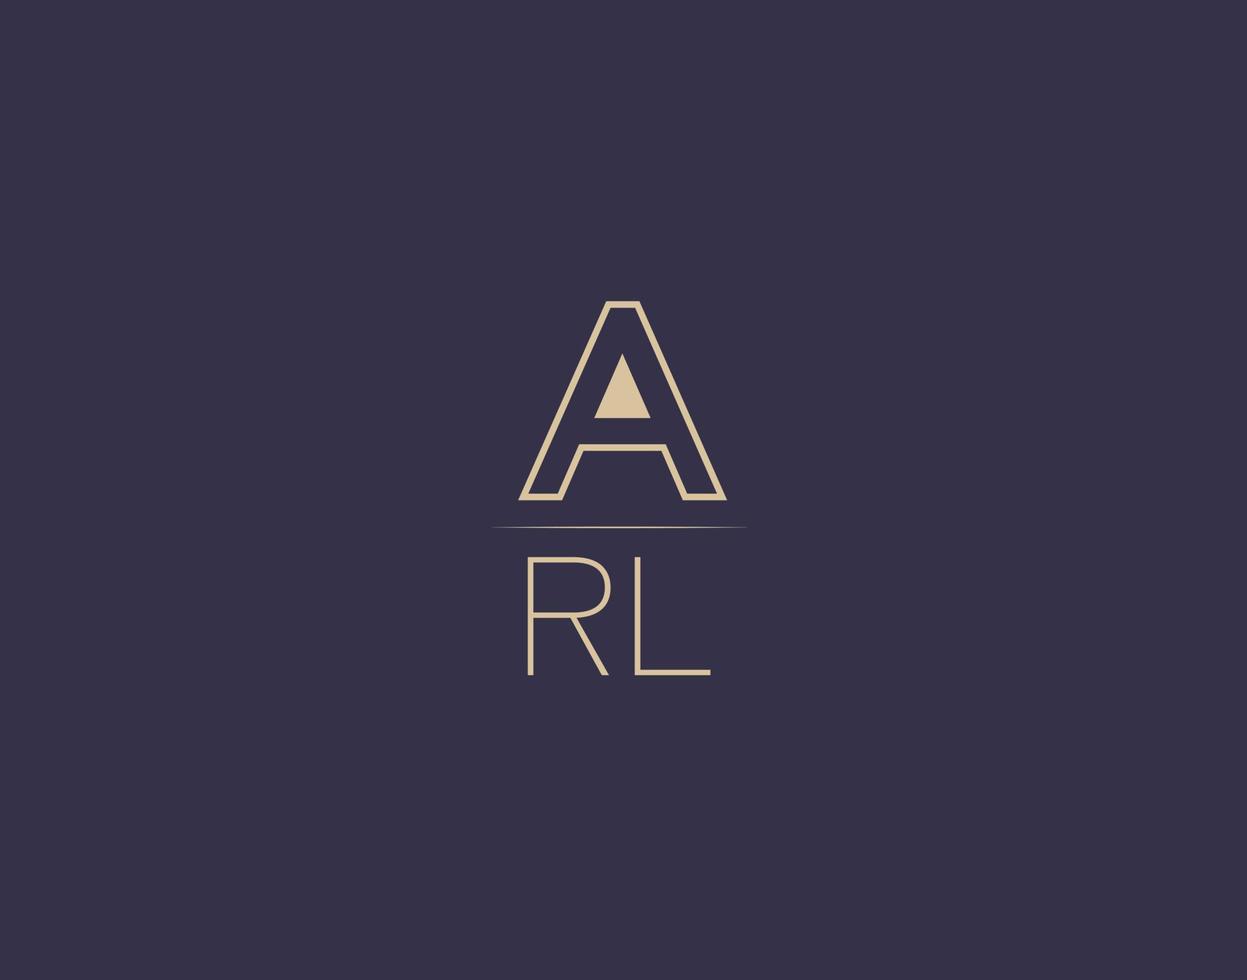 arl letter logo design imagens vetoriais minimalistas modernas vetor